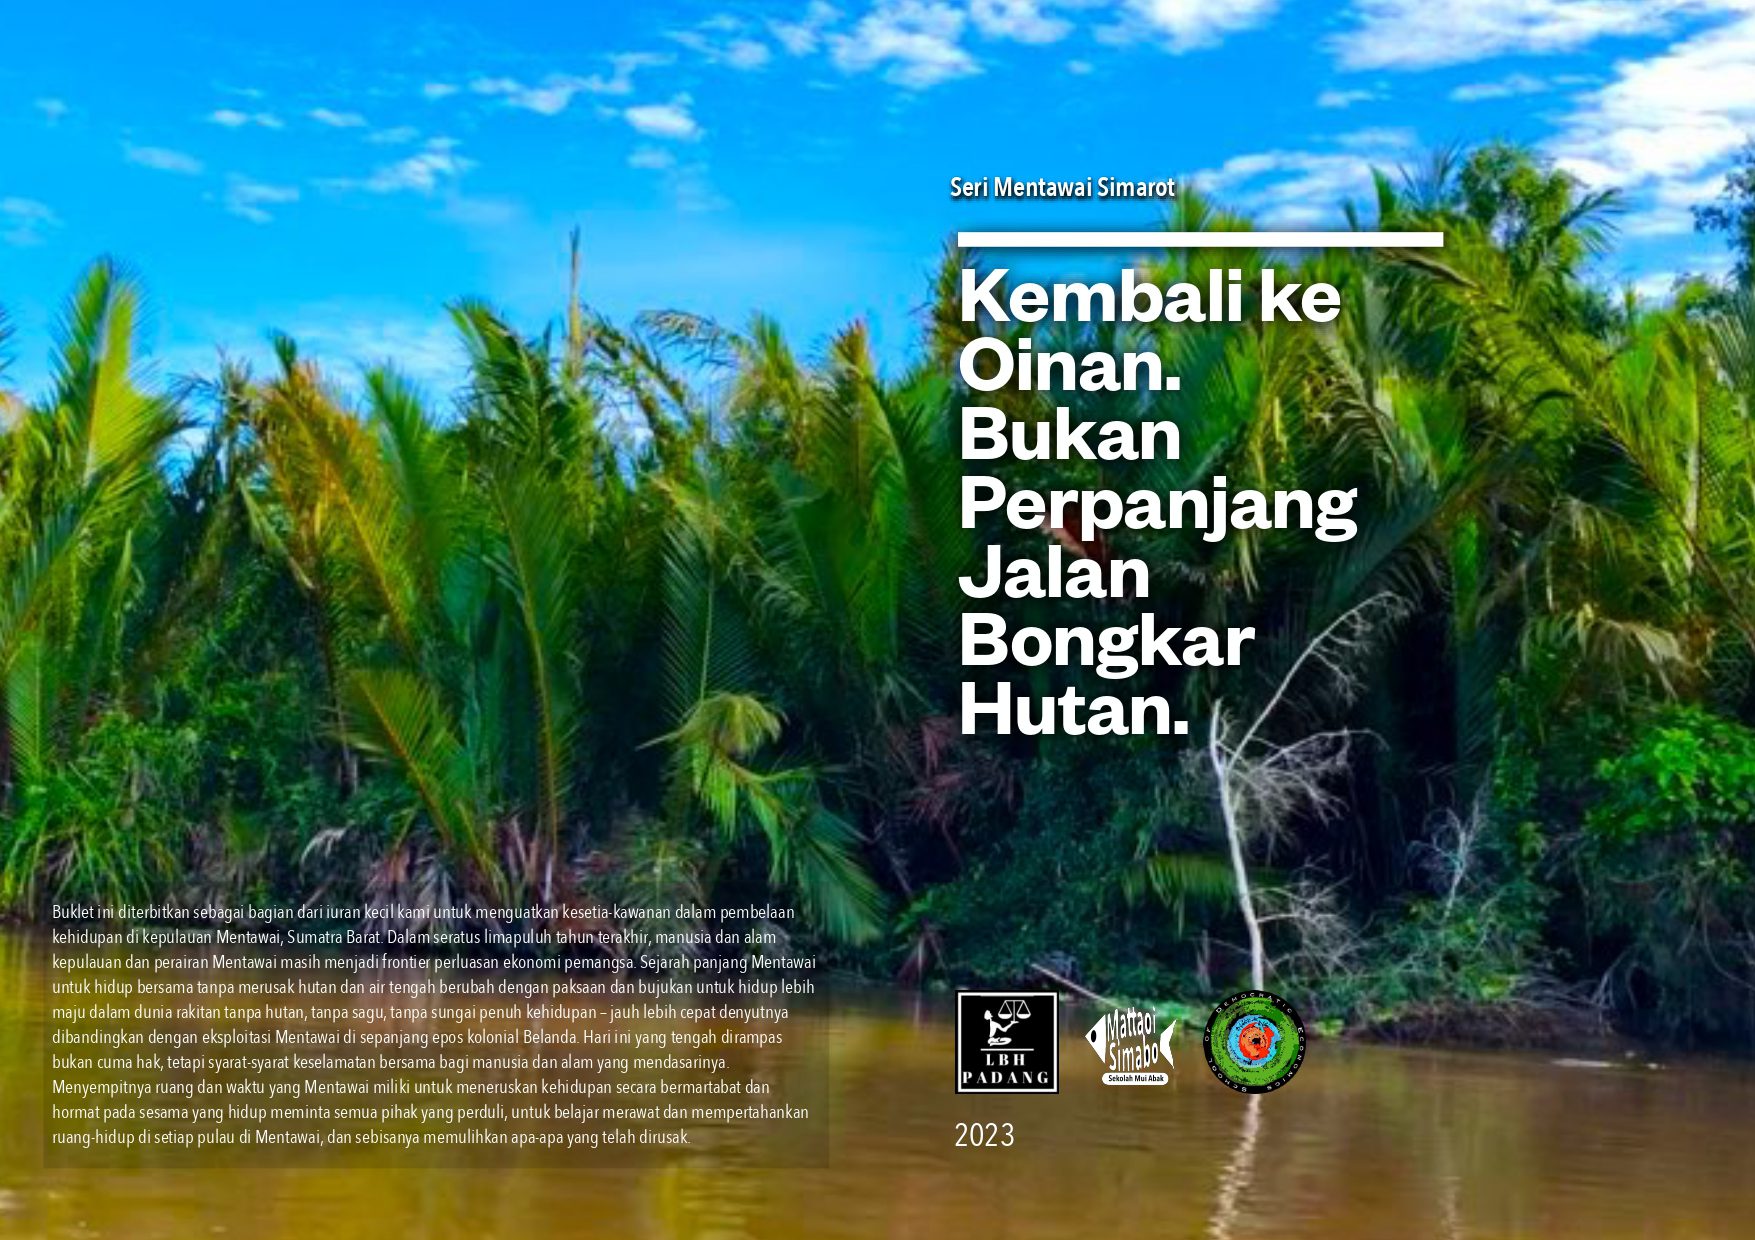 Seri Mentawai Simarot: Kembali ke Oinan. Bukan Perpanjang Jalan Bongkar Hutan